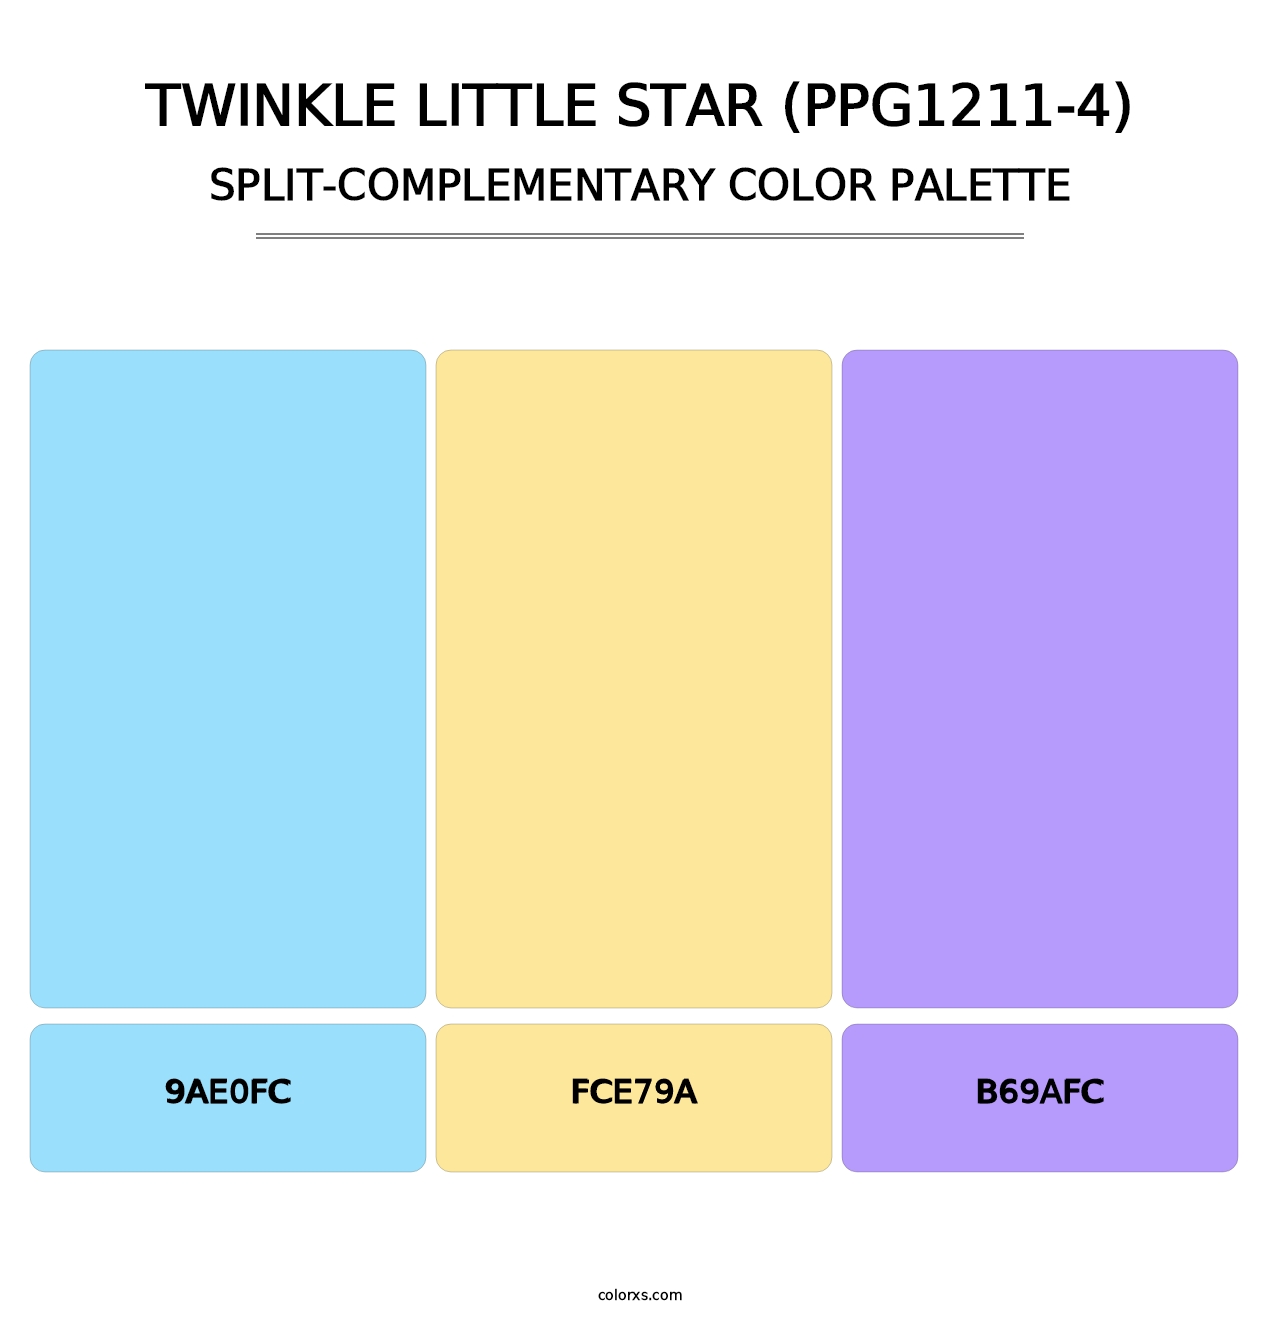 Twinkle Little Star (PPG1211-4) - Split-Complementary Color Palette